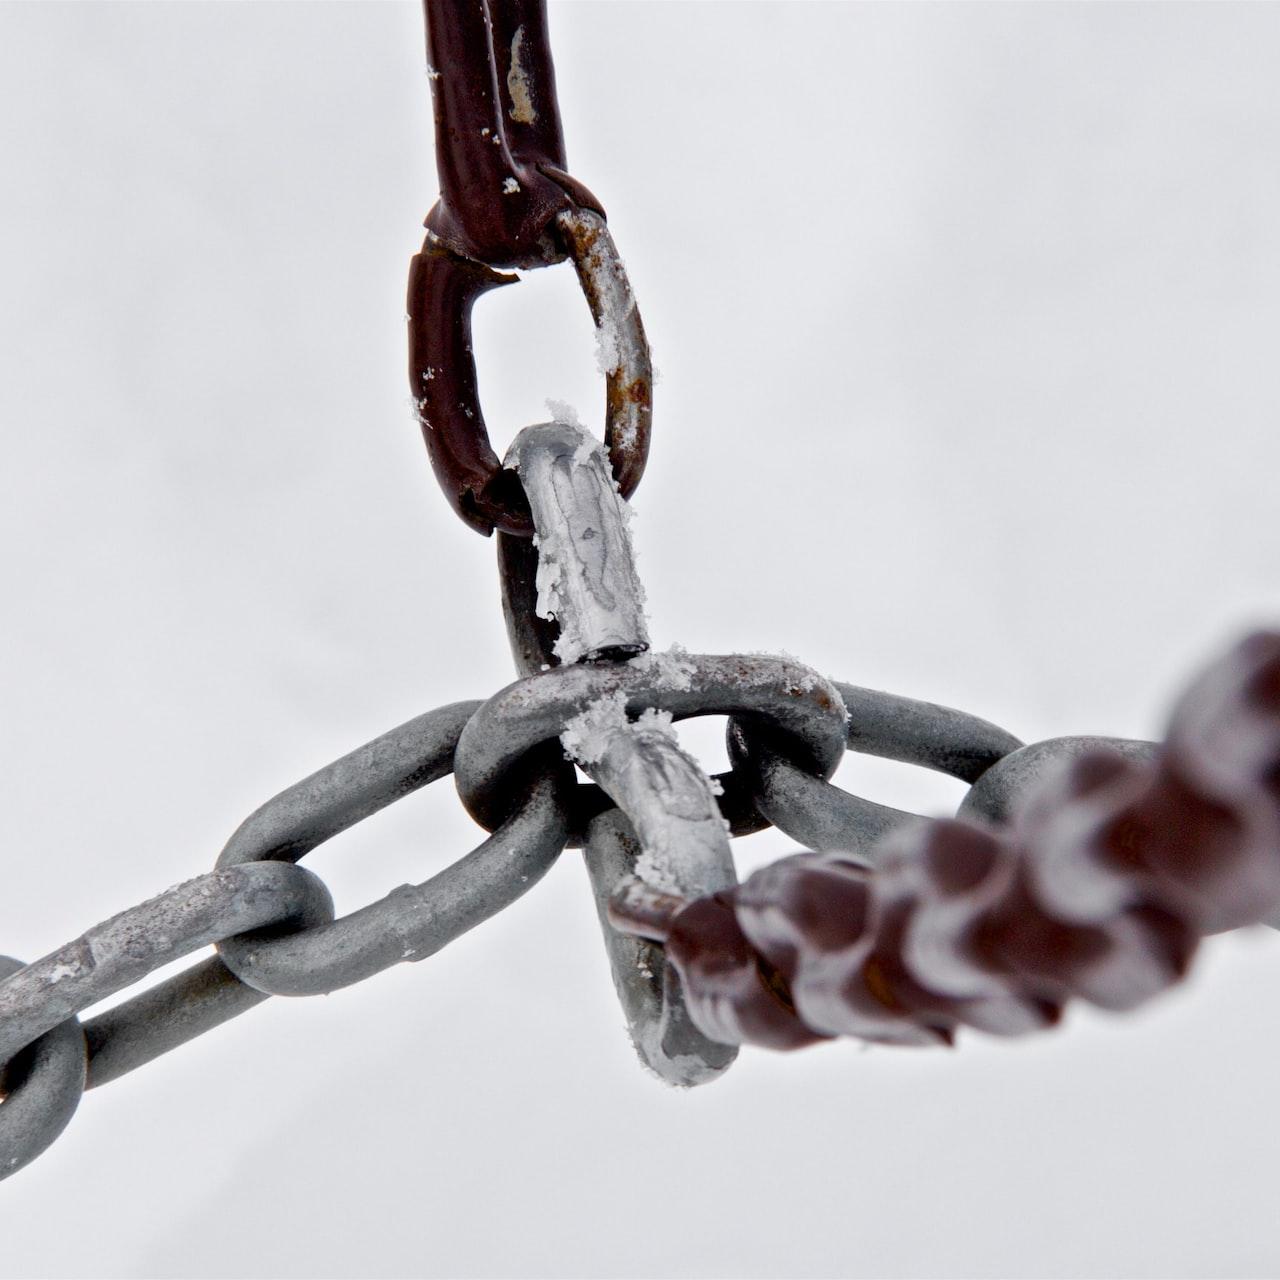 selective focus photograph of gray metal chains